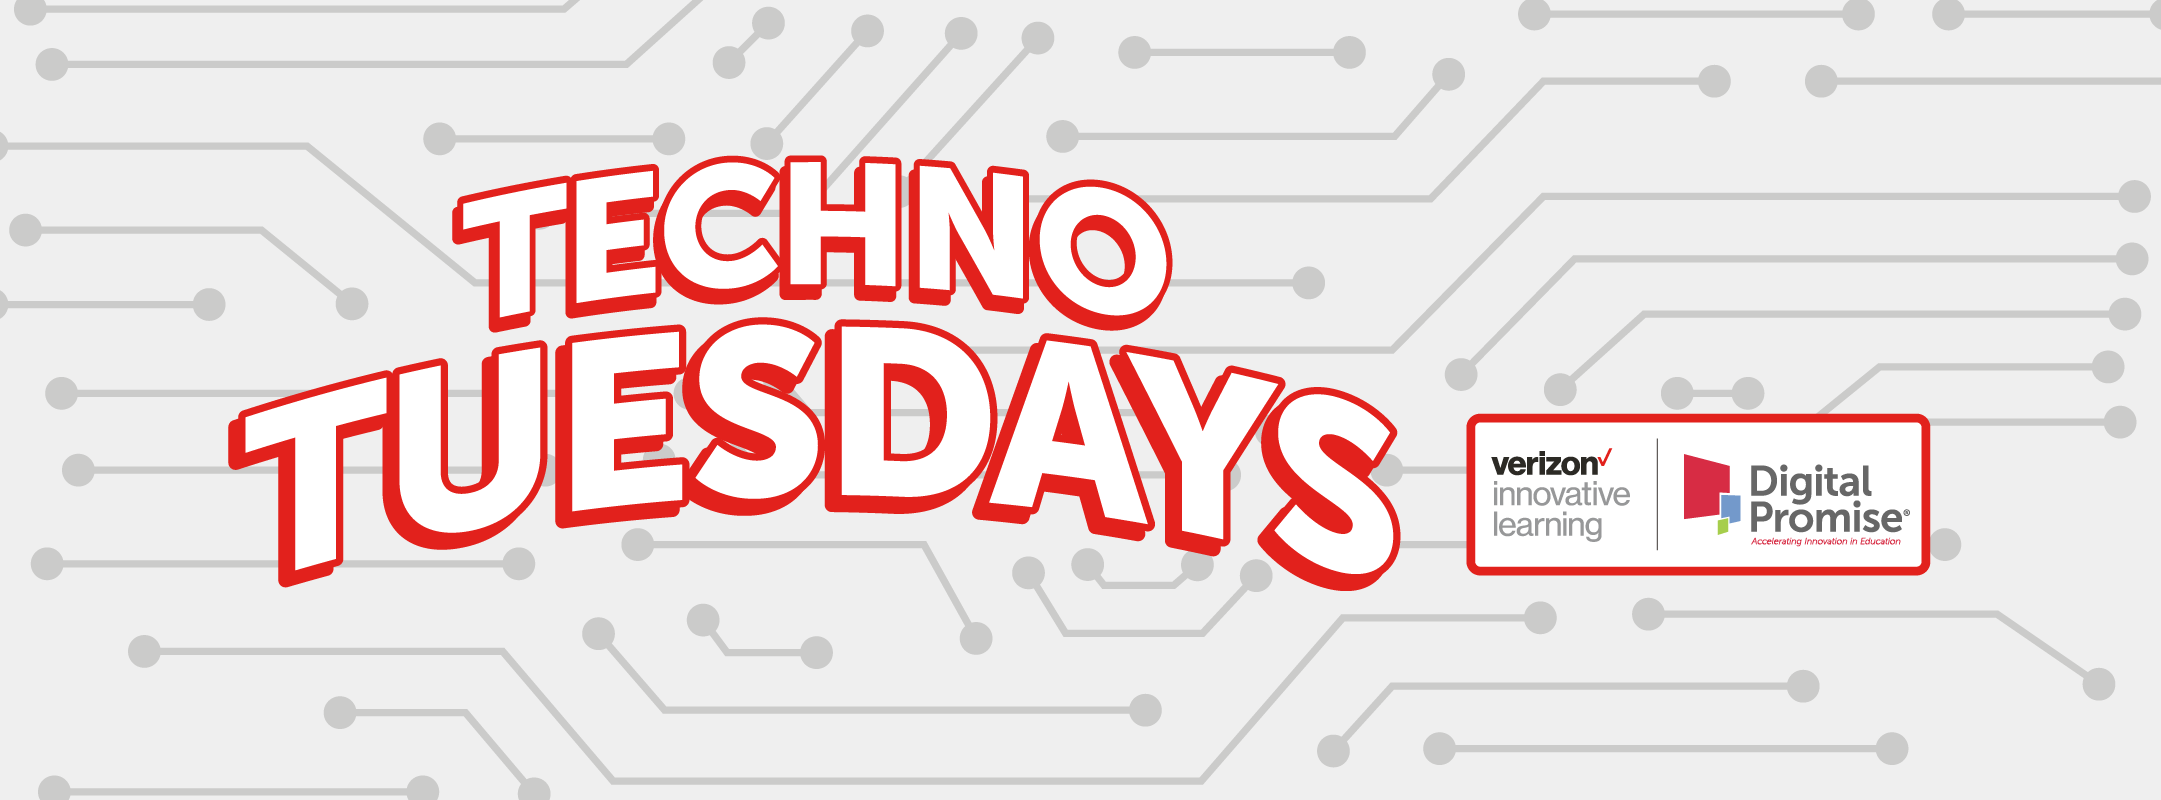 Digital Promise Webinars - Techno Tuesdays